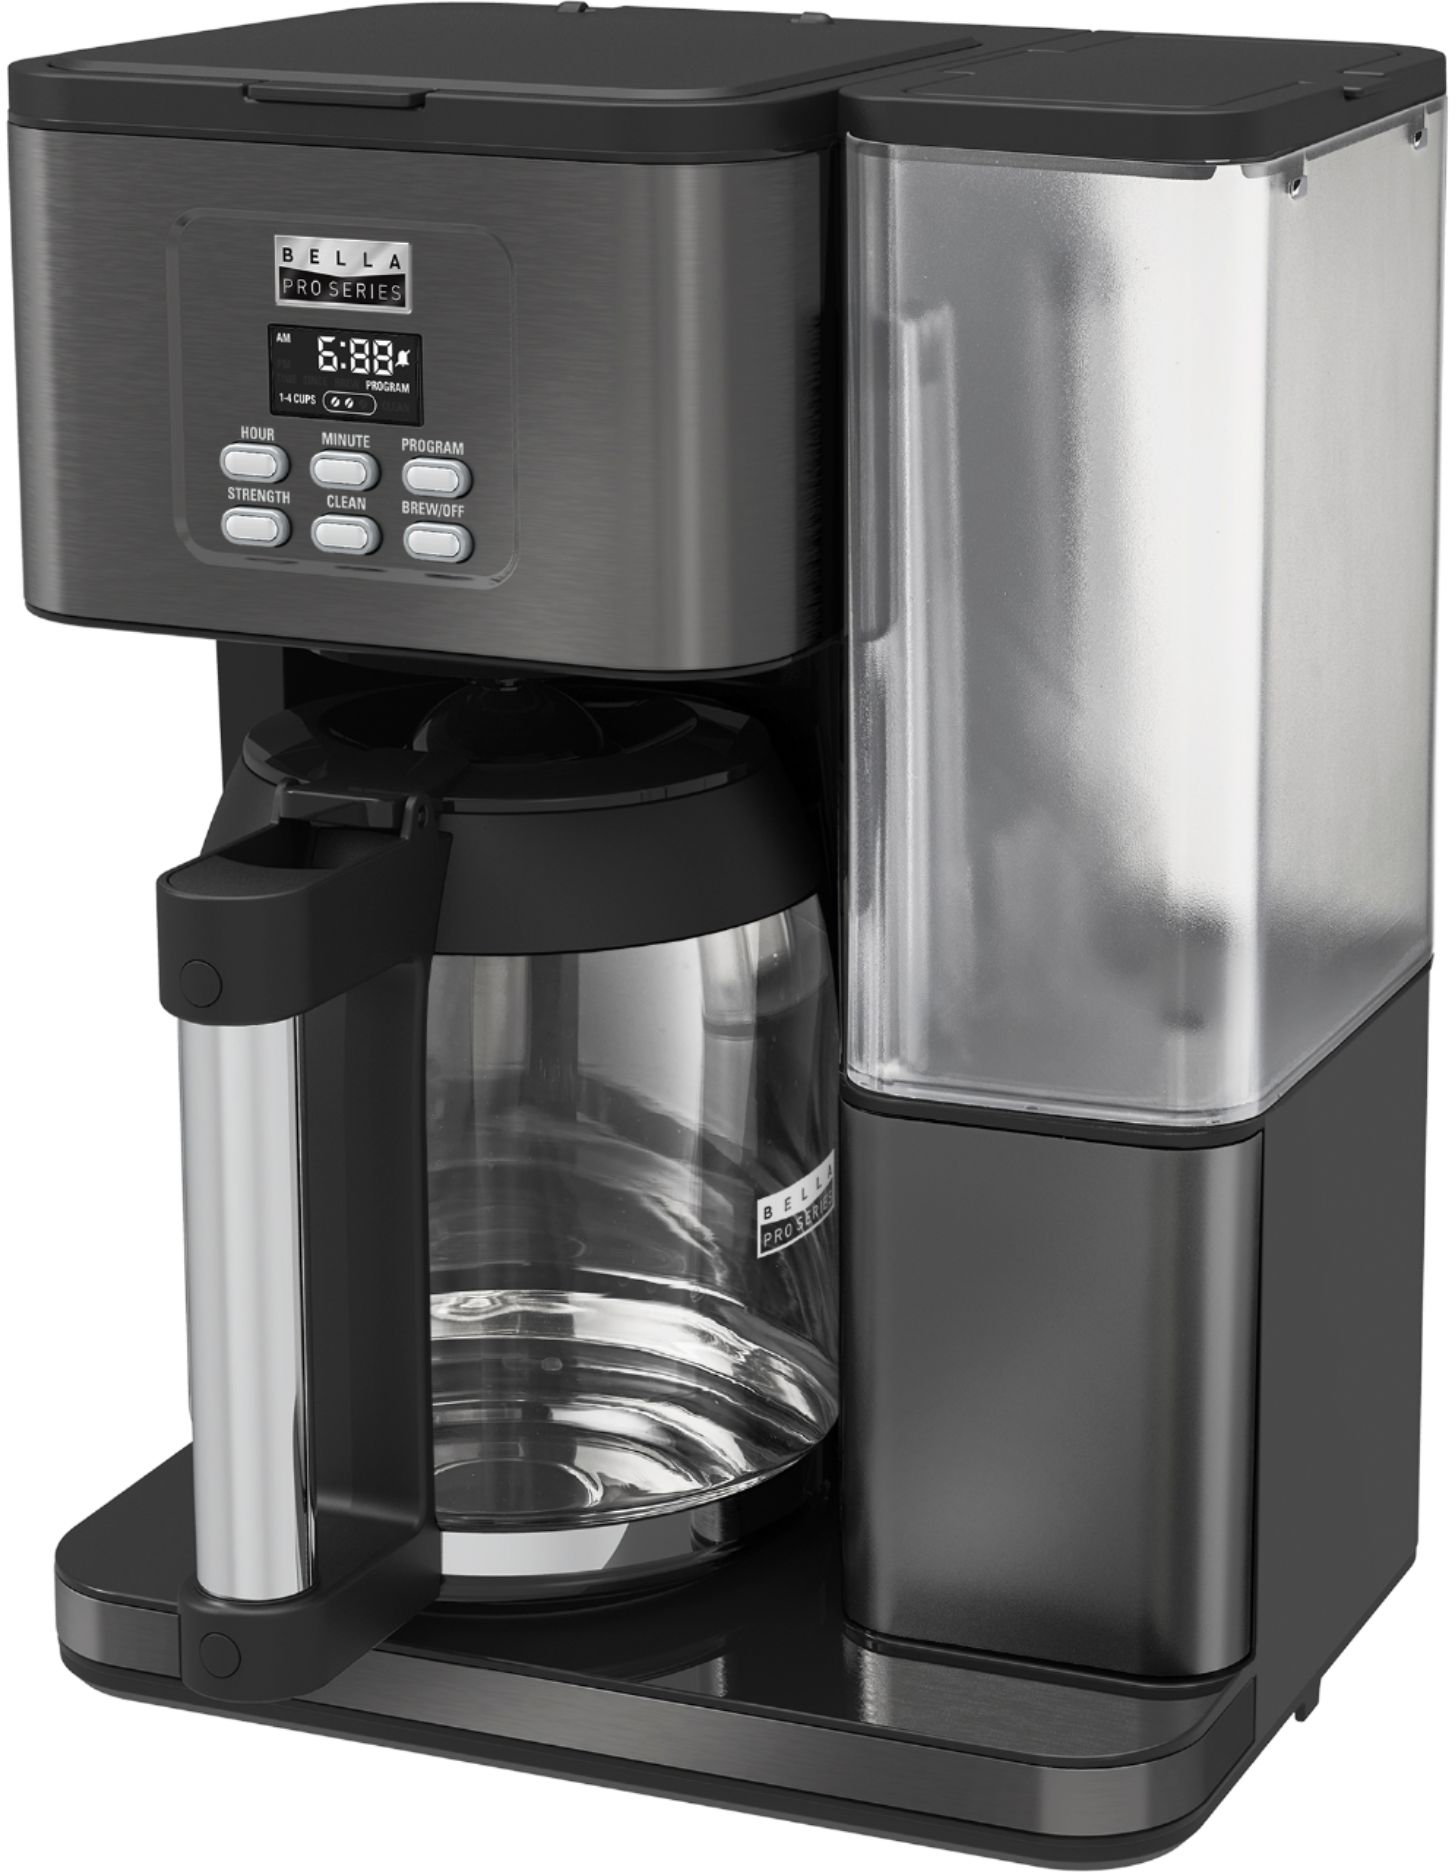 Best Buy: Bella Pro Series 18-Cup Programmable Coffee Maker Black Stainless  Steel 90118